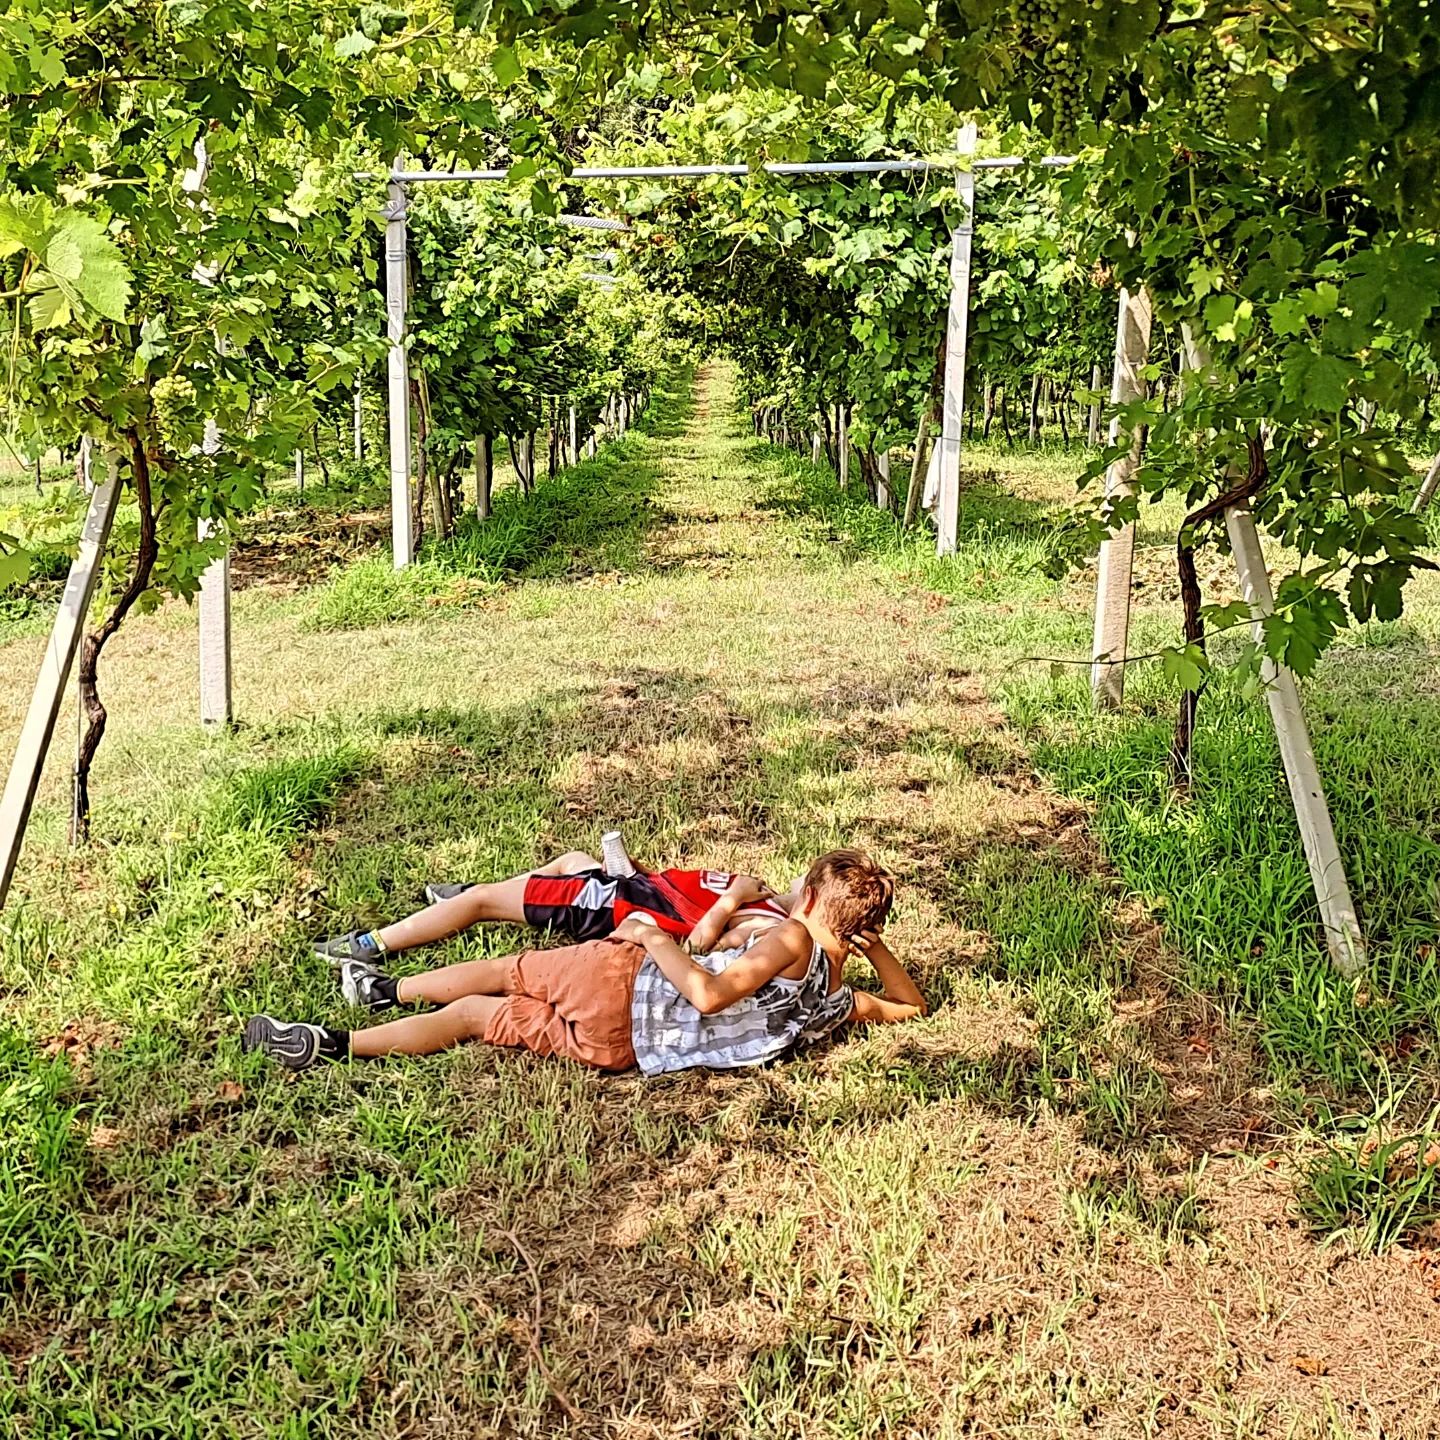 Grazie per la visita @oratorio_madonna_di_miralta_ ❤️ #wineblogger #winelover #wine #erbalucedicaluso #erbaluce #canavese #piemonte #moncrivello #italy🇮🇹 #moncravel

#piedmont #piemont #italie #vercelli #italien #ピエモンテ #イタリア #피에몬테 #이탈리아